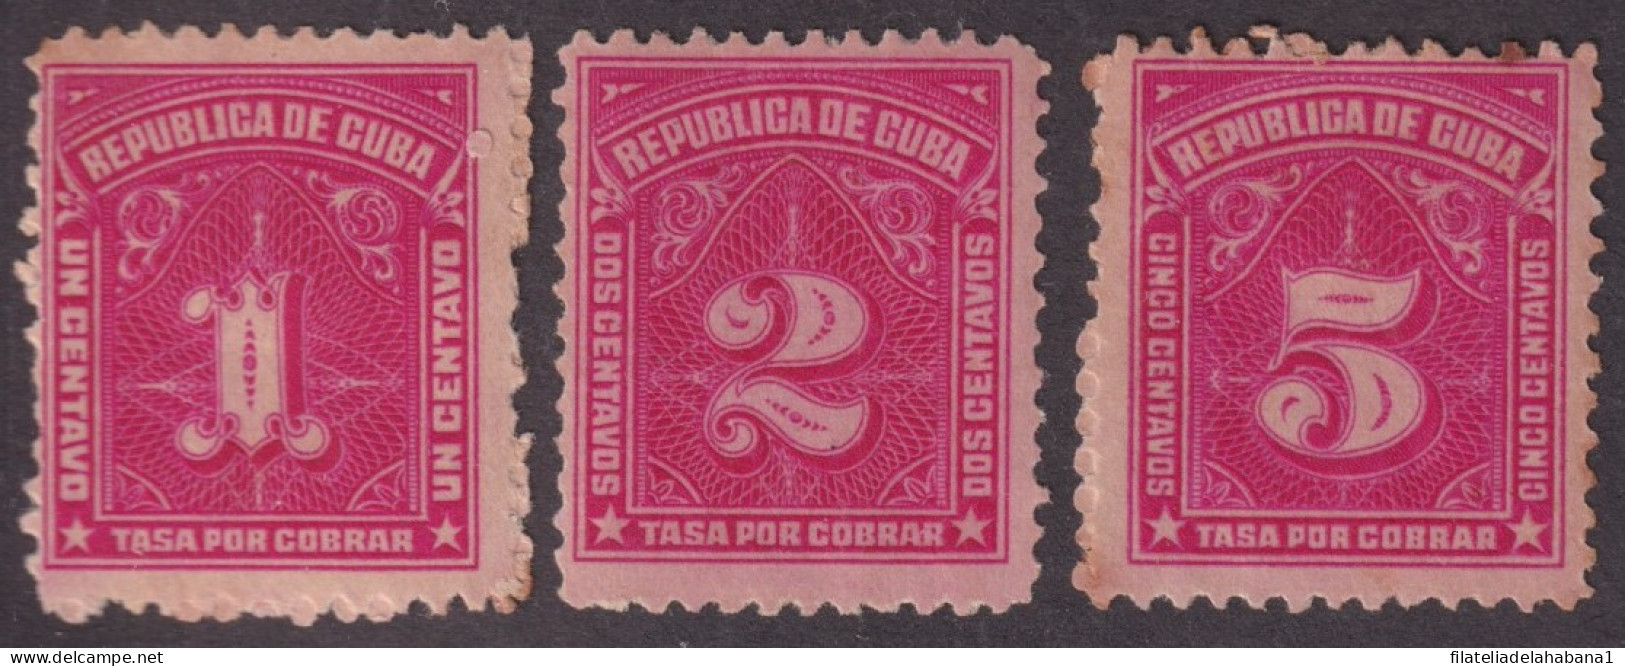 1927-78 CUBA REPUBLICA 1927 MH POSTAGE DUE TASA POR PAGAR COMPLETE SET.  - Ongebruikt